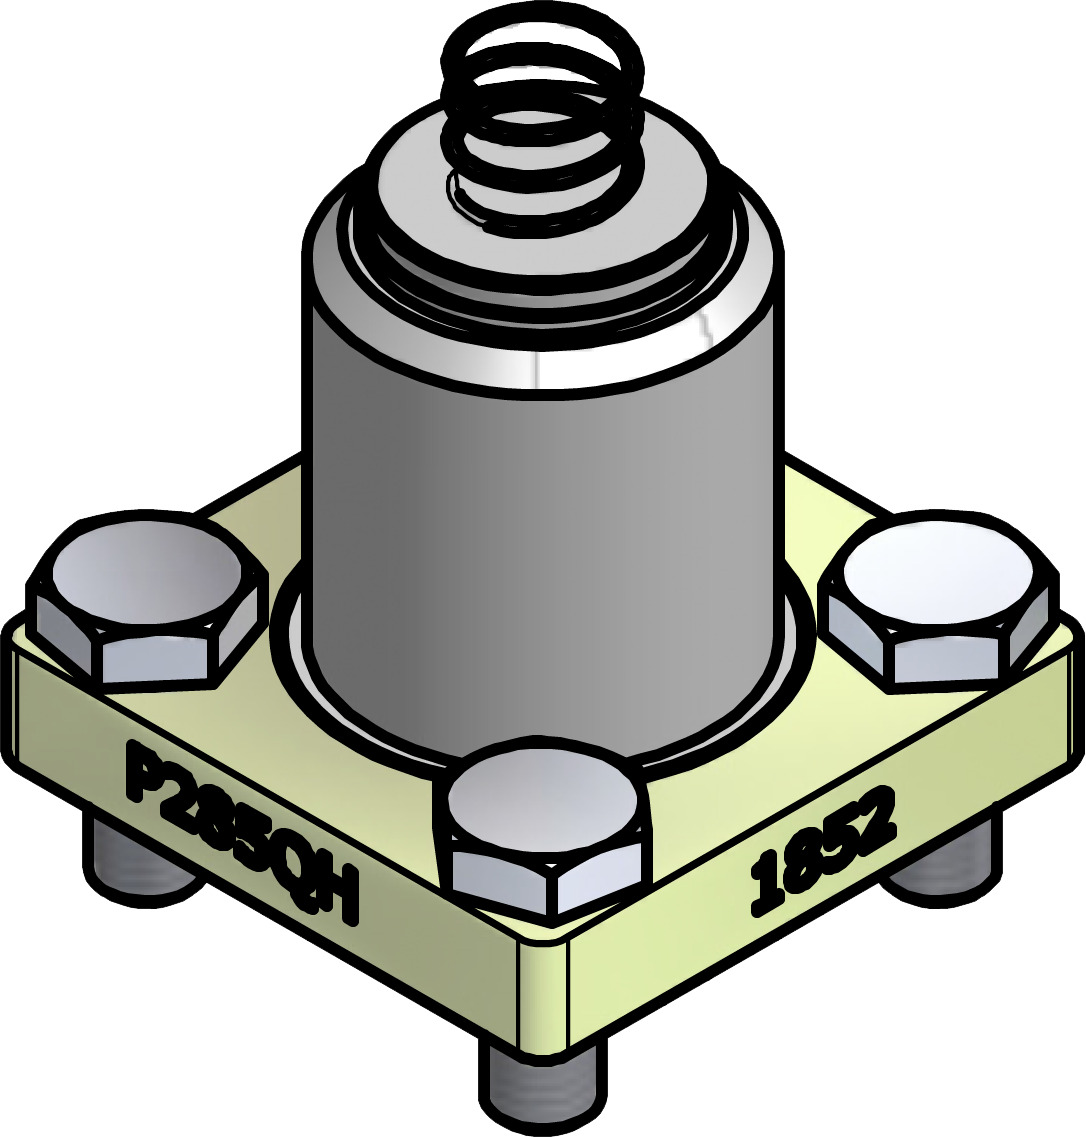 ICFC 20, Check valve module